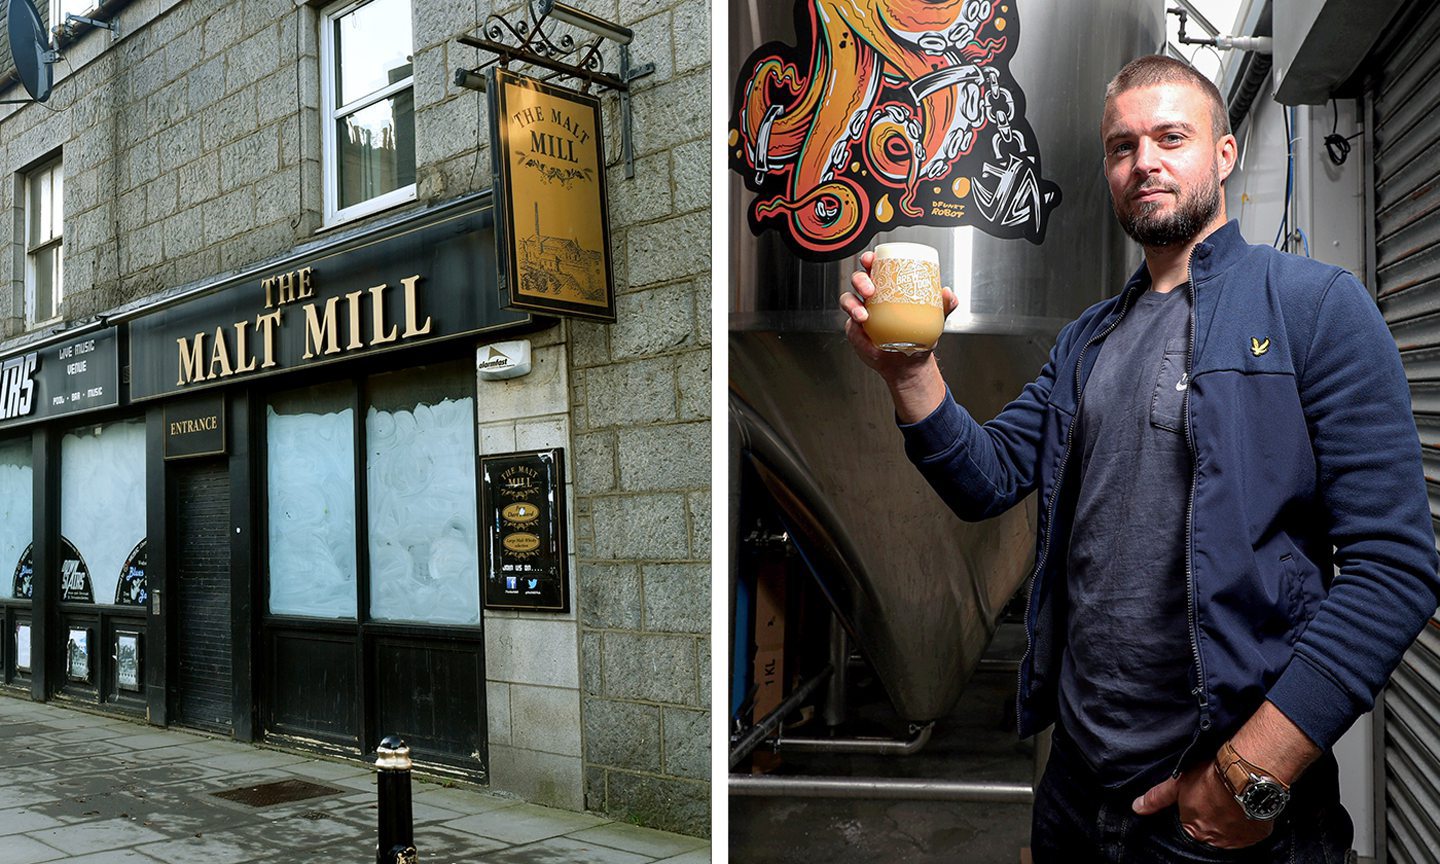 The Malt Mill will become a new Brew Toon pub.